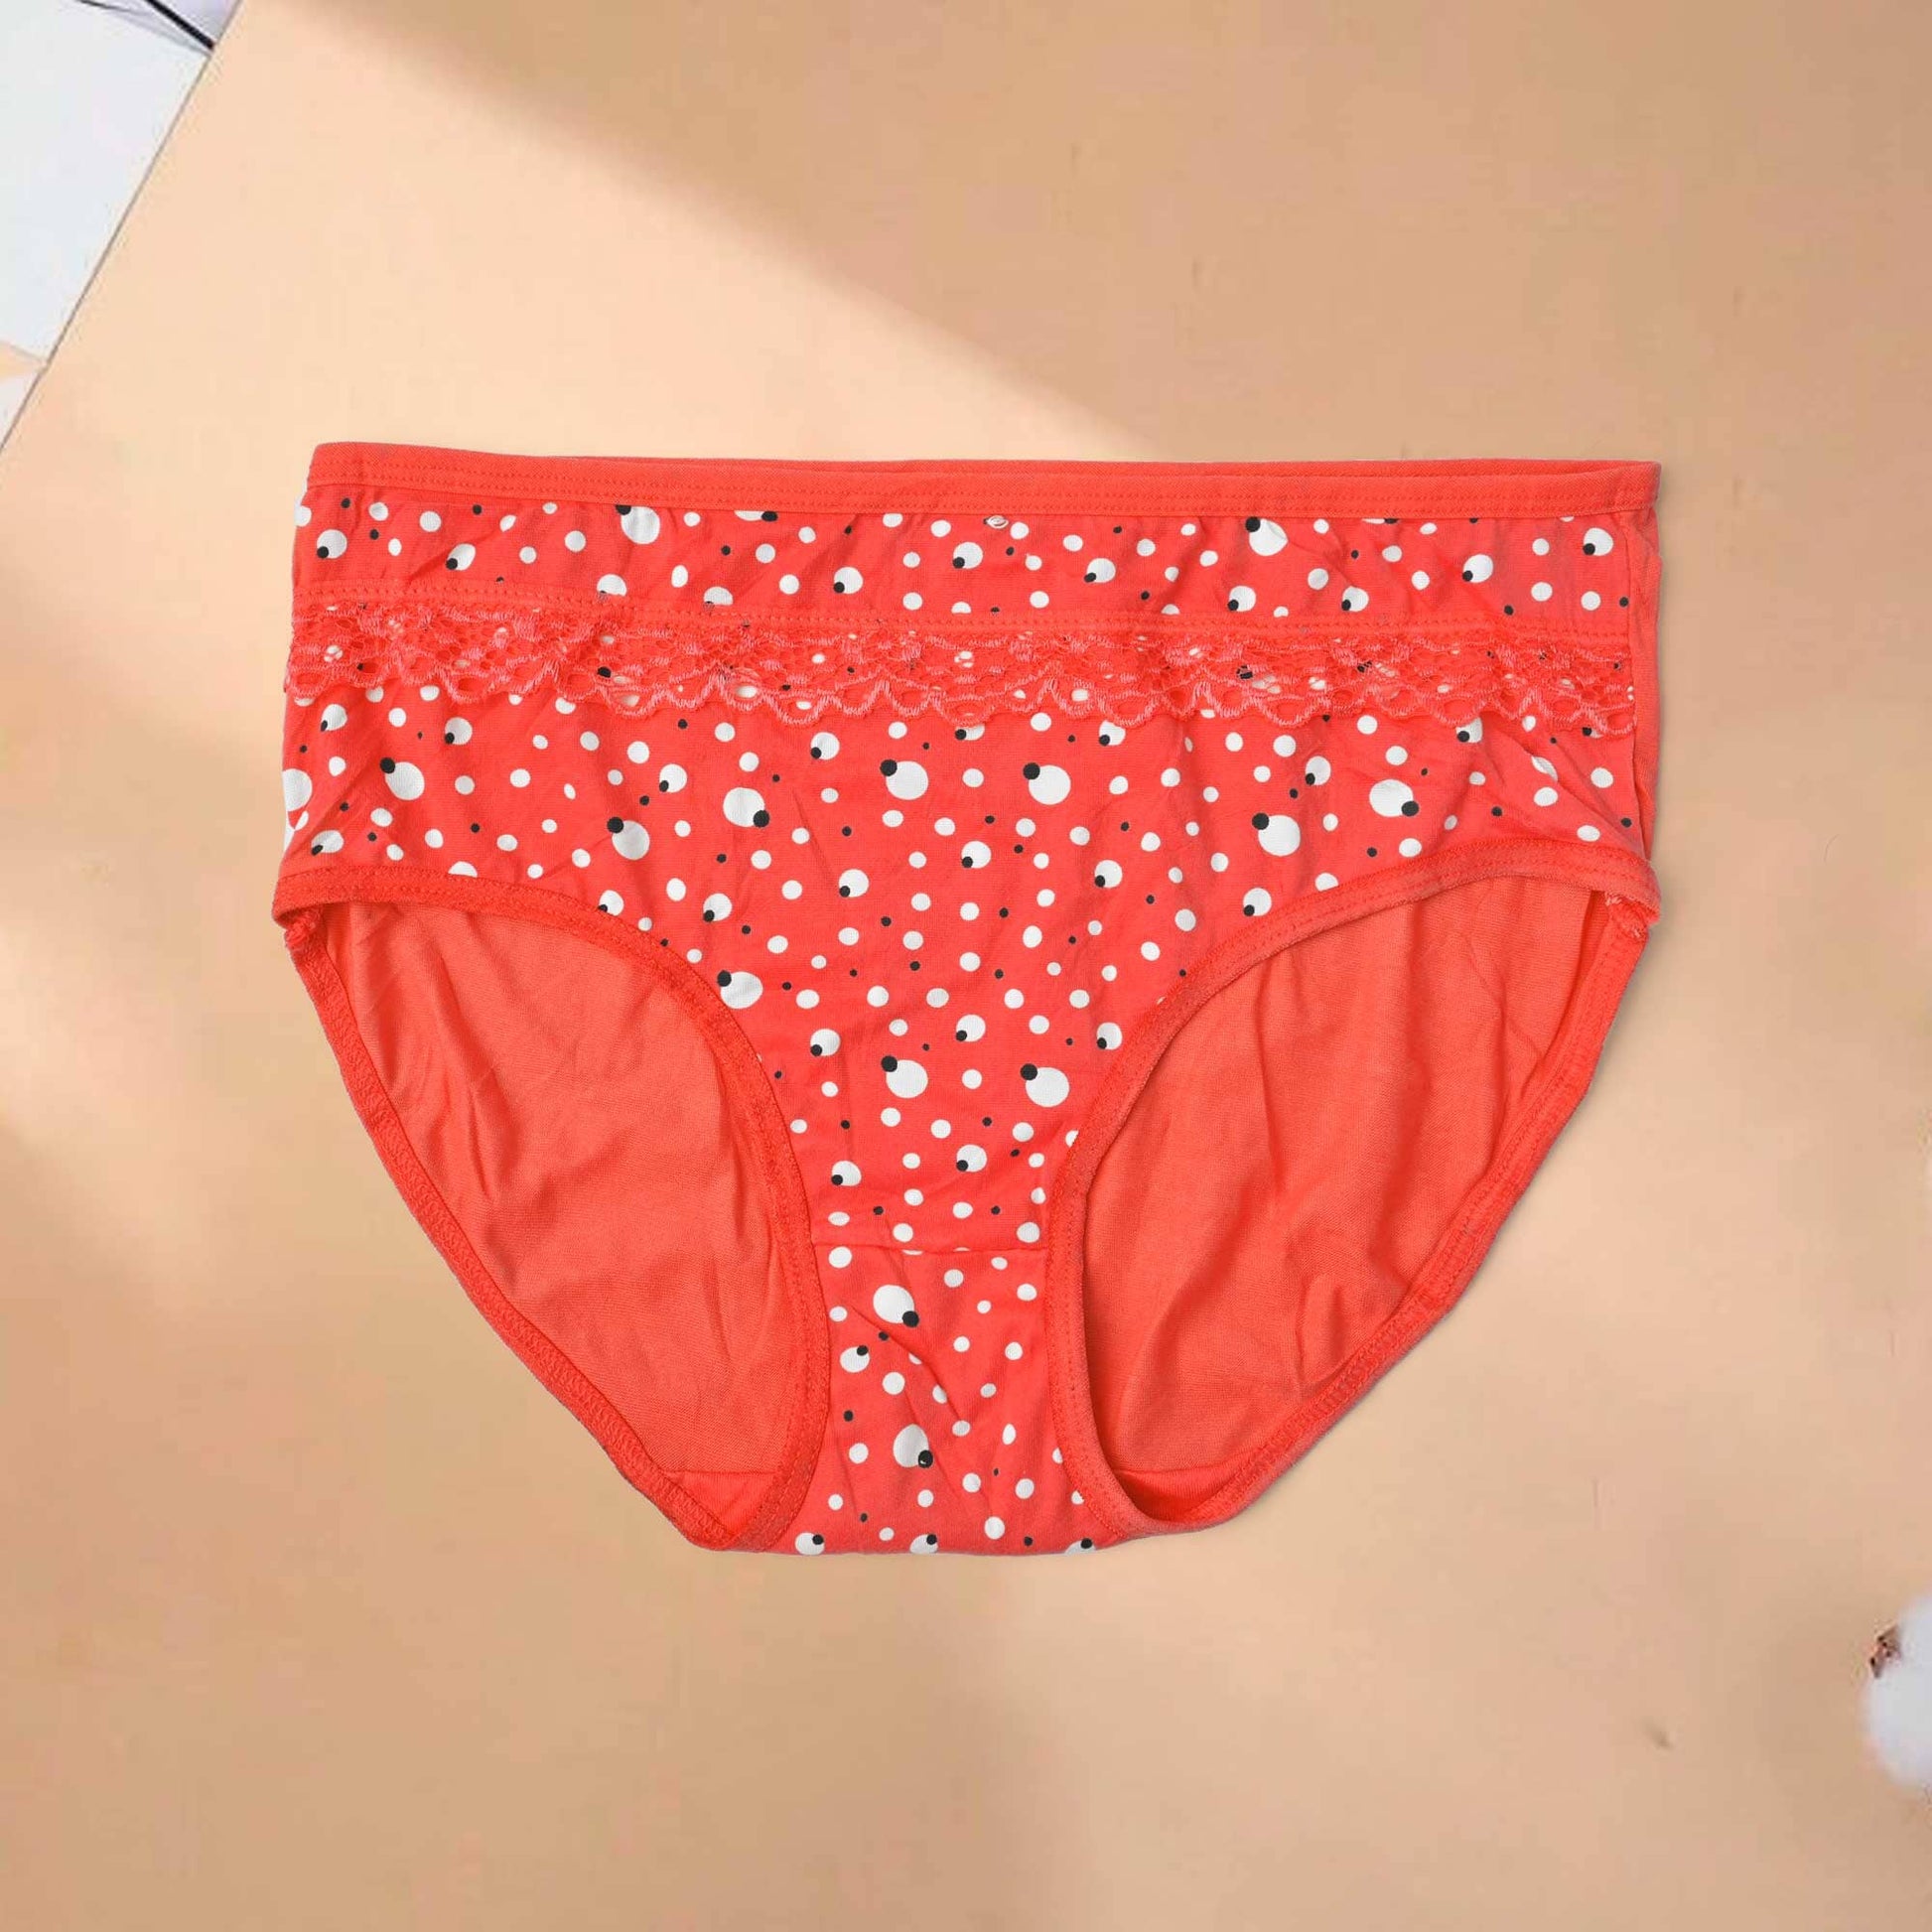 Yinidanya Women's Lace Design Polka Dots Printed Underwear Women's Lingerie RAM Red 28-34 